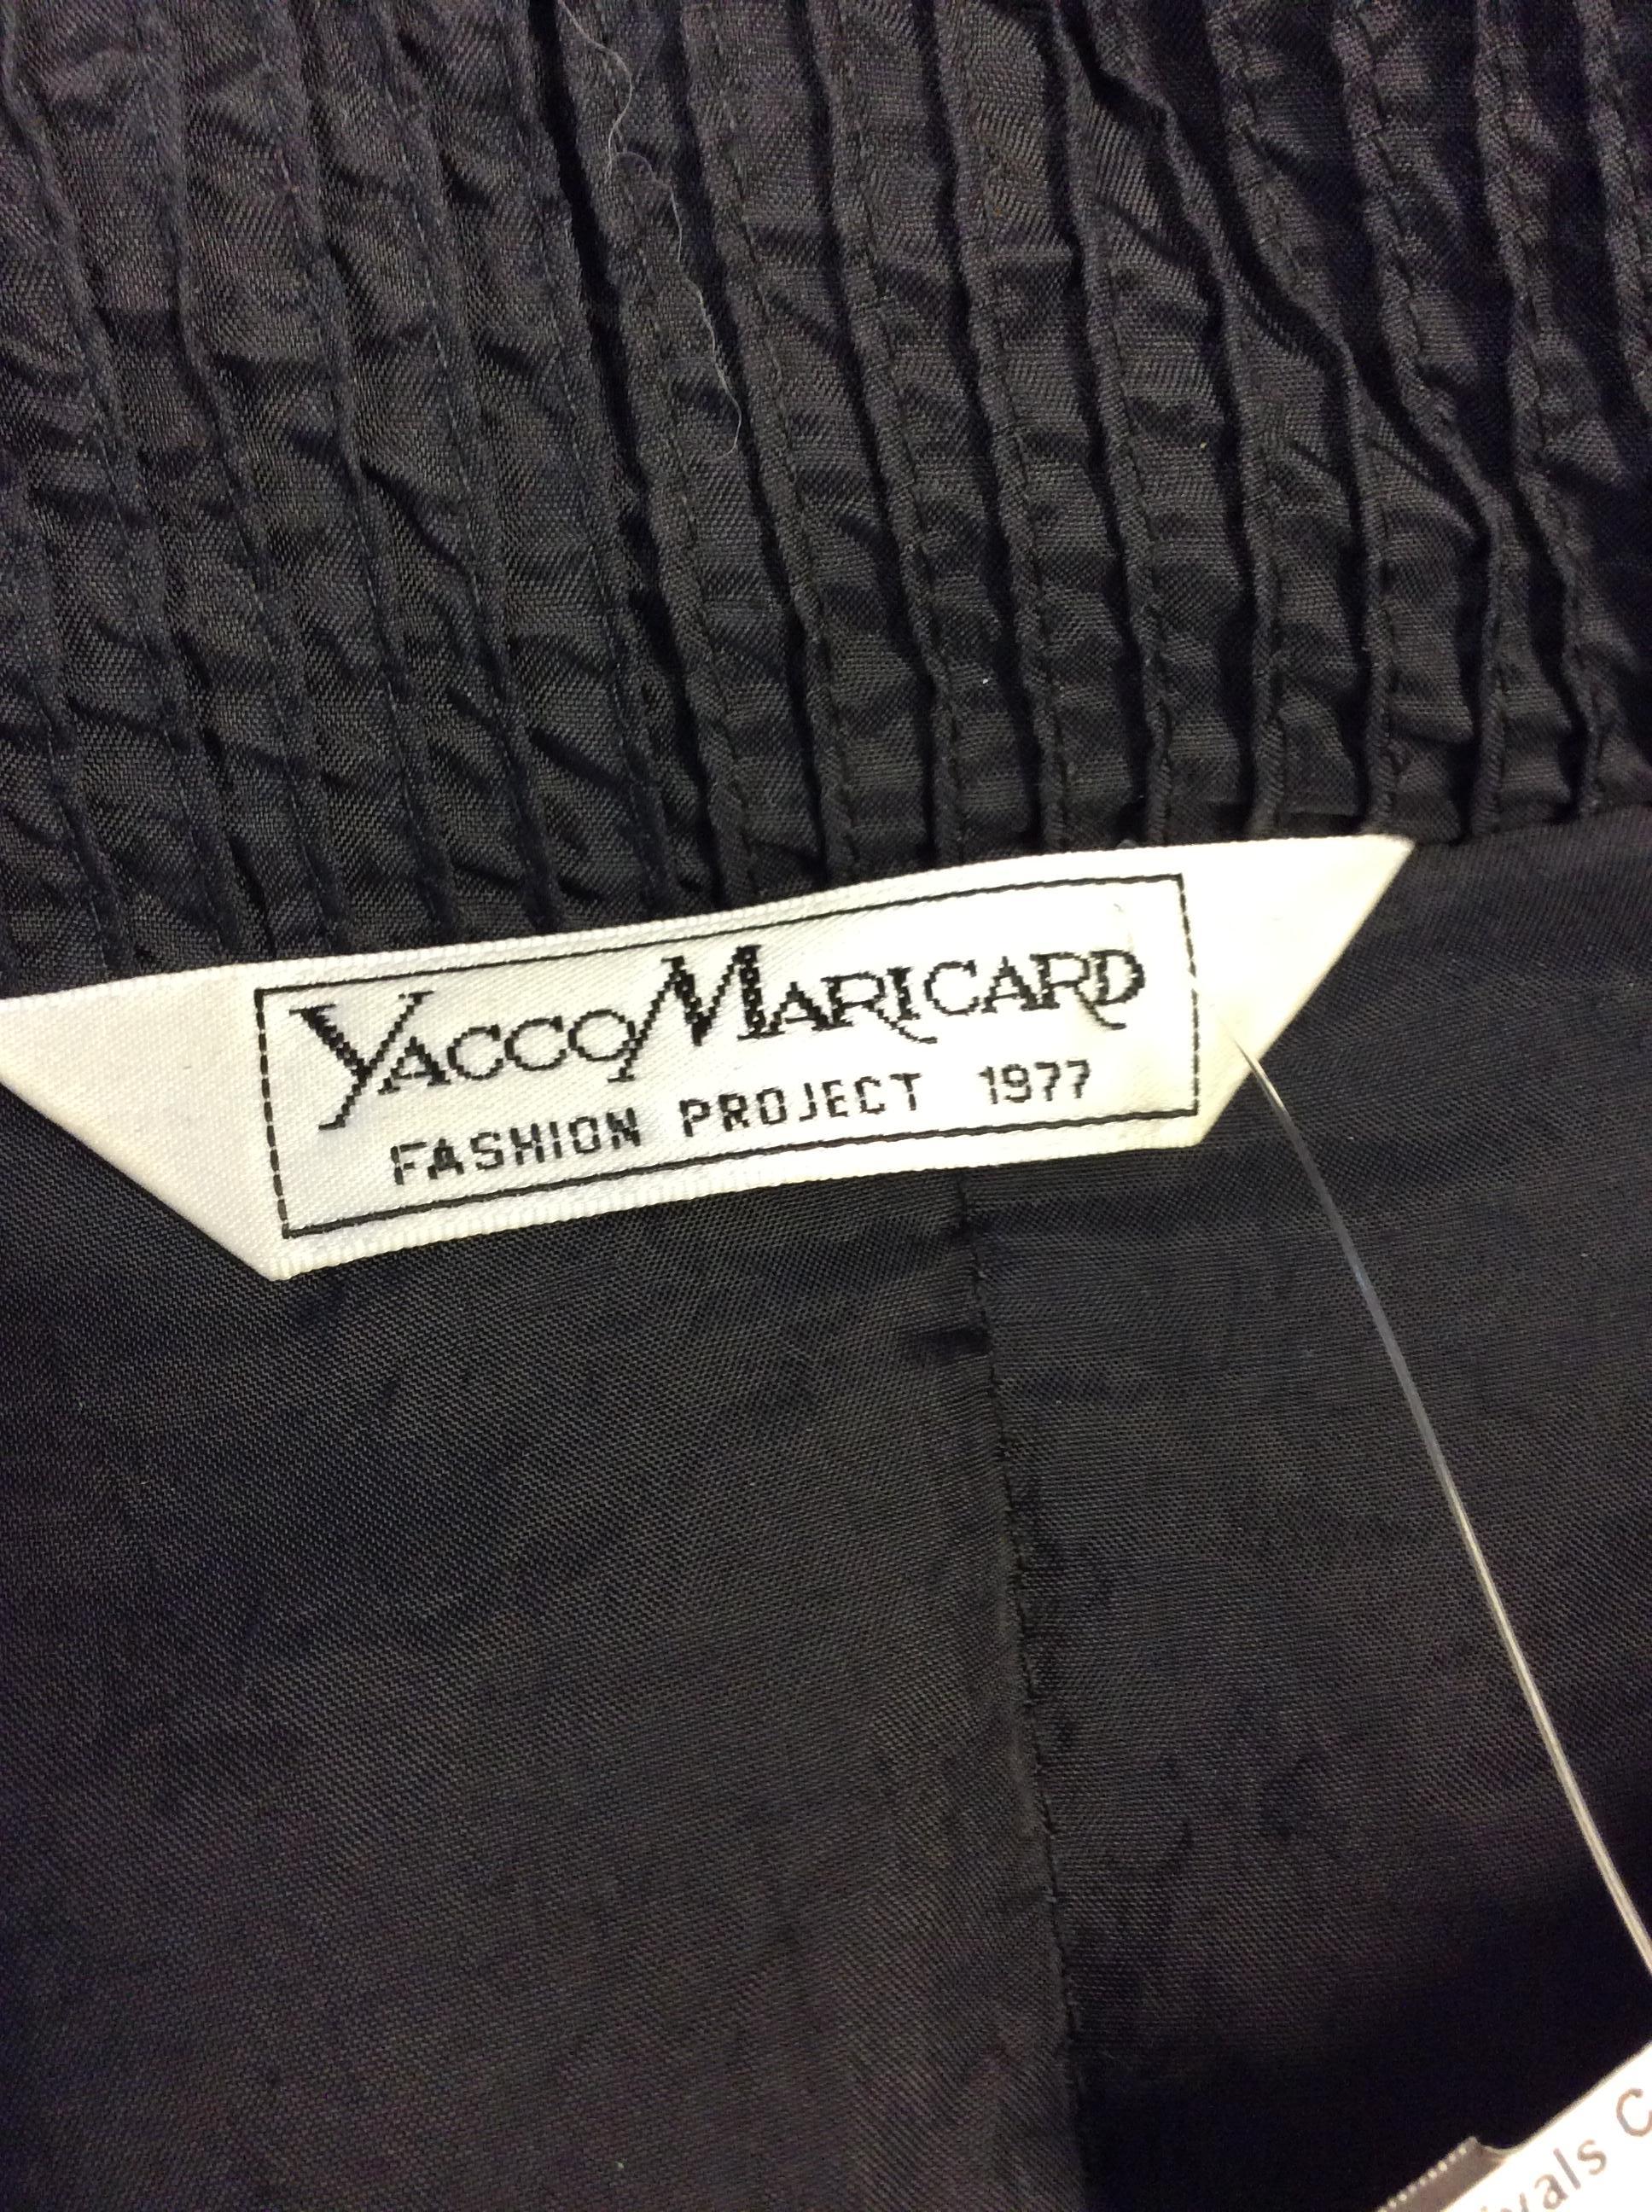 Yacco Mericard Black Nylon Coat For Sale 3